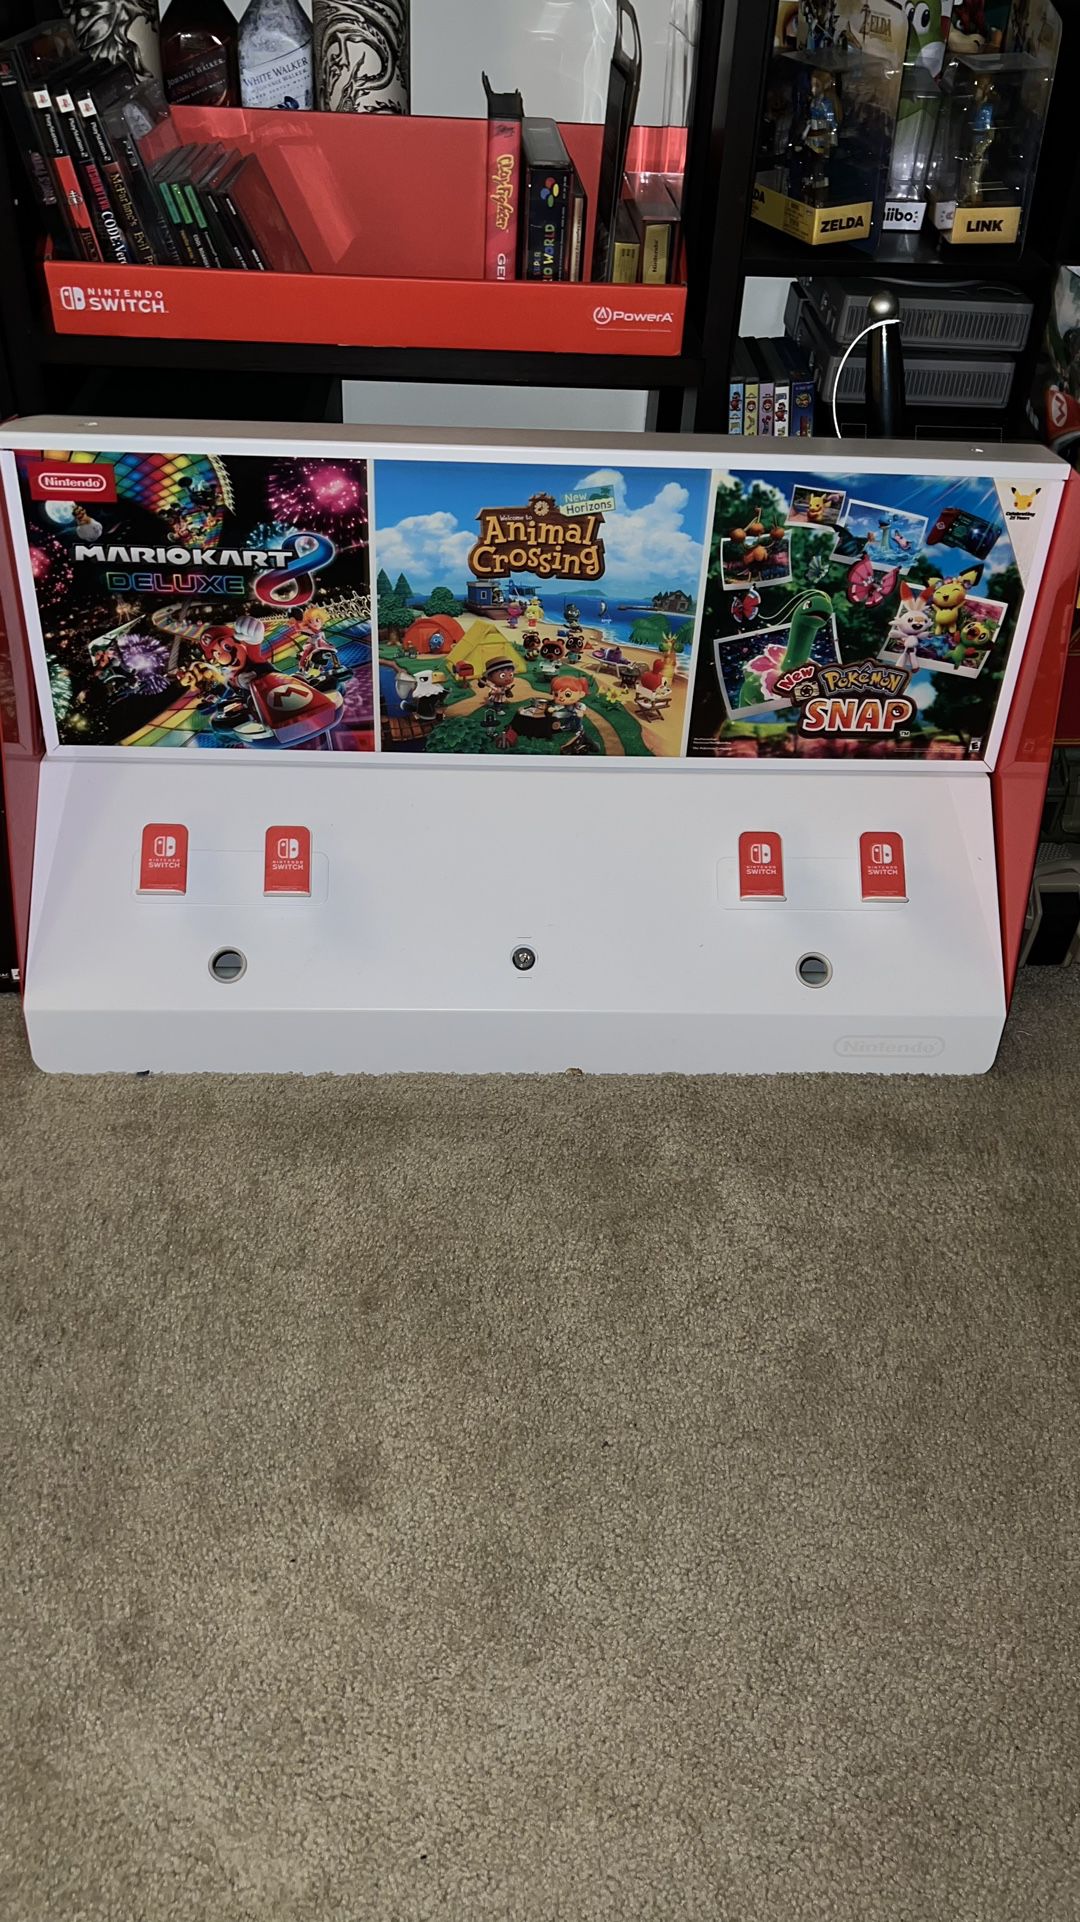 Official Nintendo Switch Kiosk Light Up Display